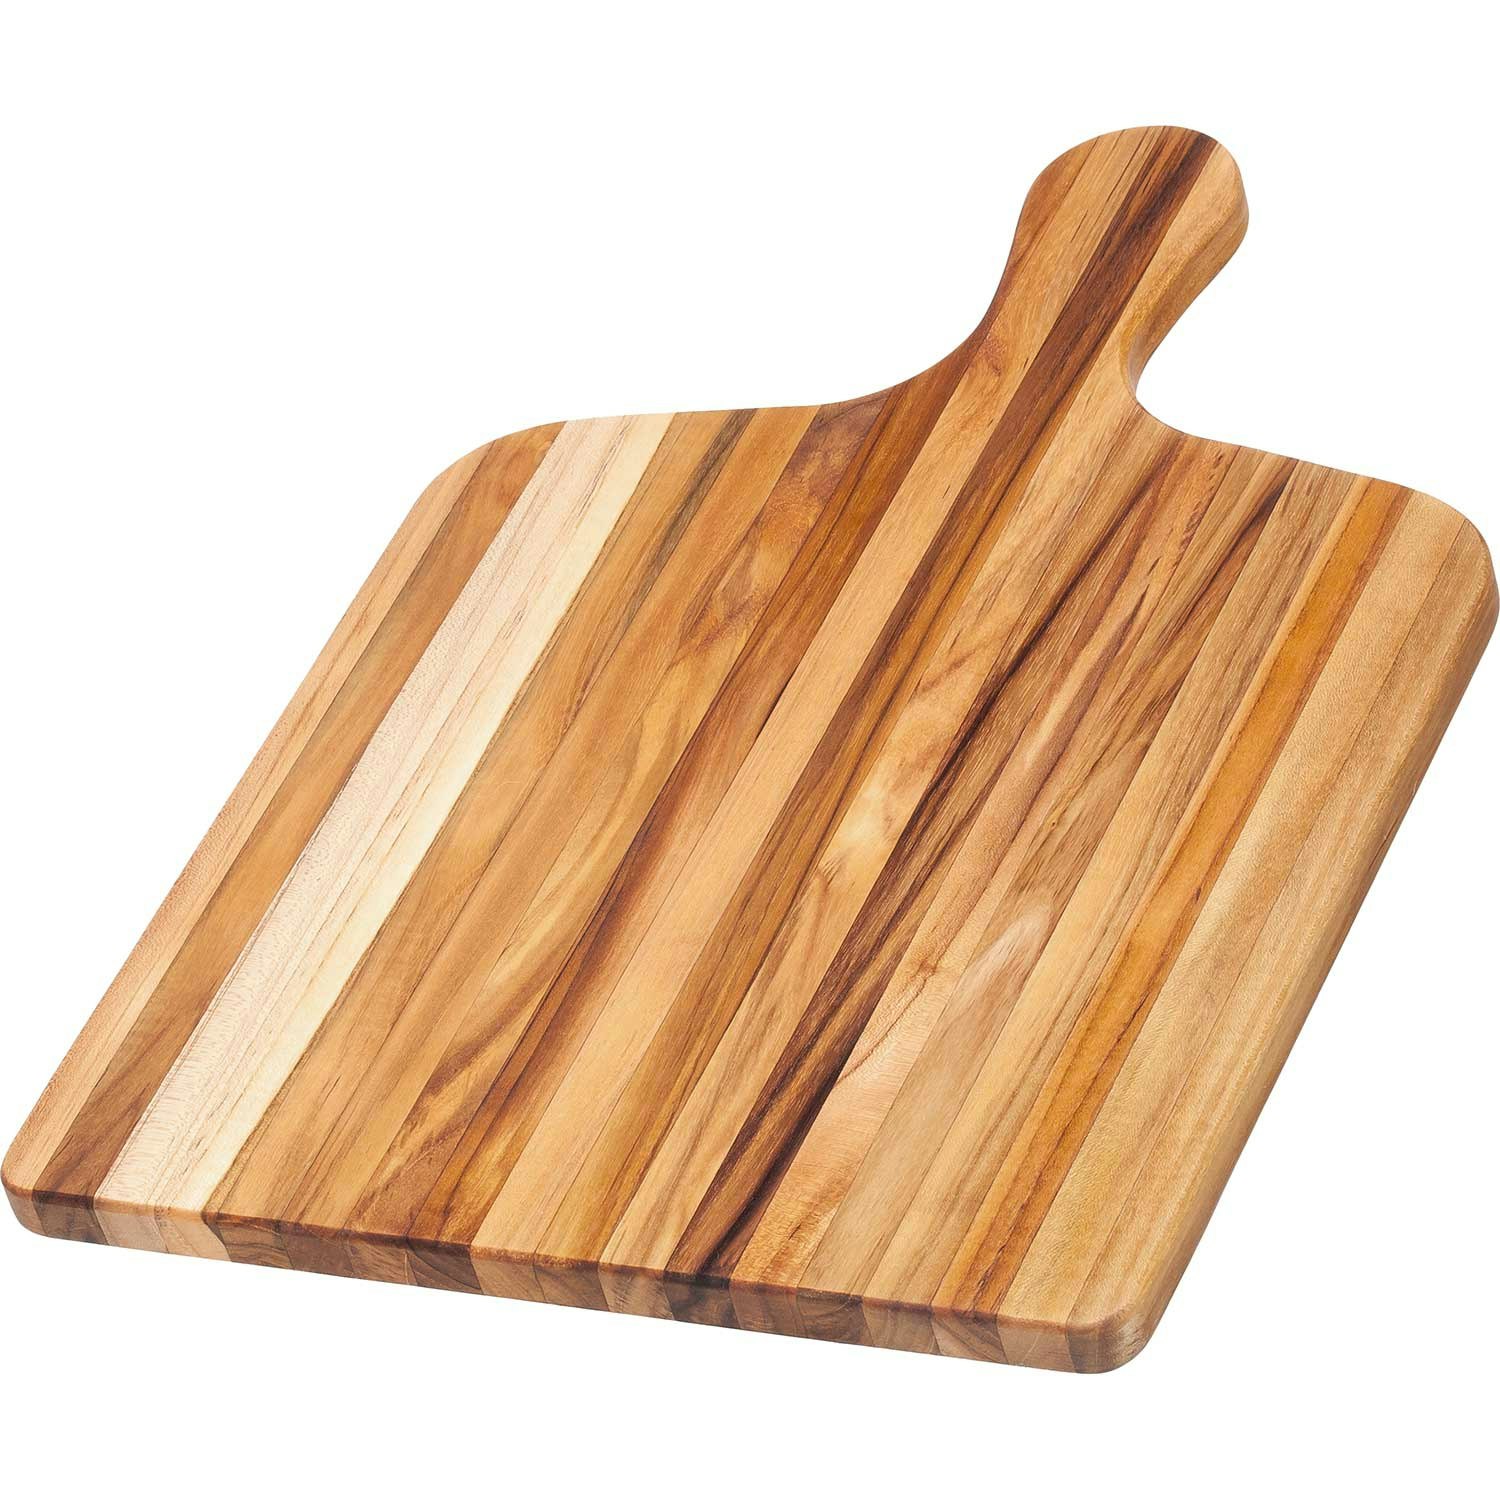 https://royaldesign.com/image/2/teakhaus-edge-grain-marinecollectionboards-m-gourmet-board-0